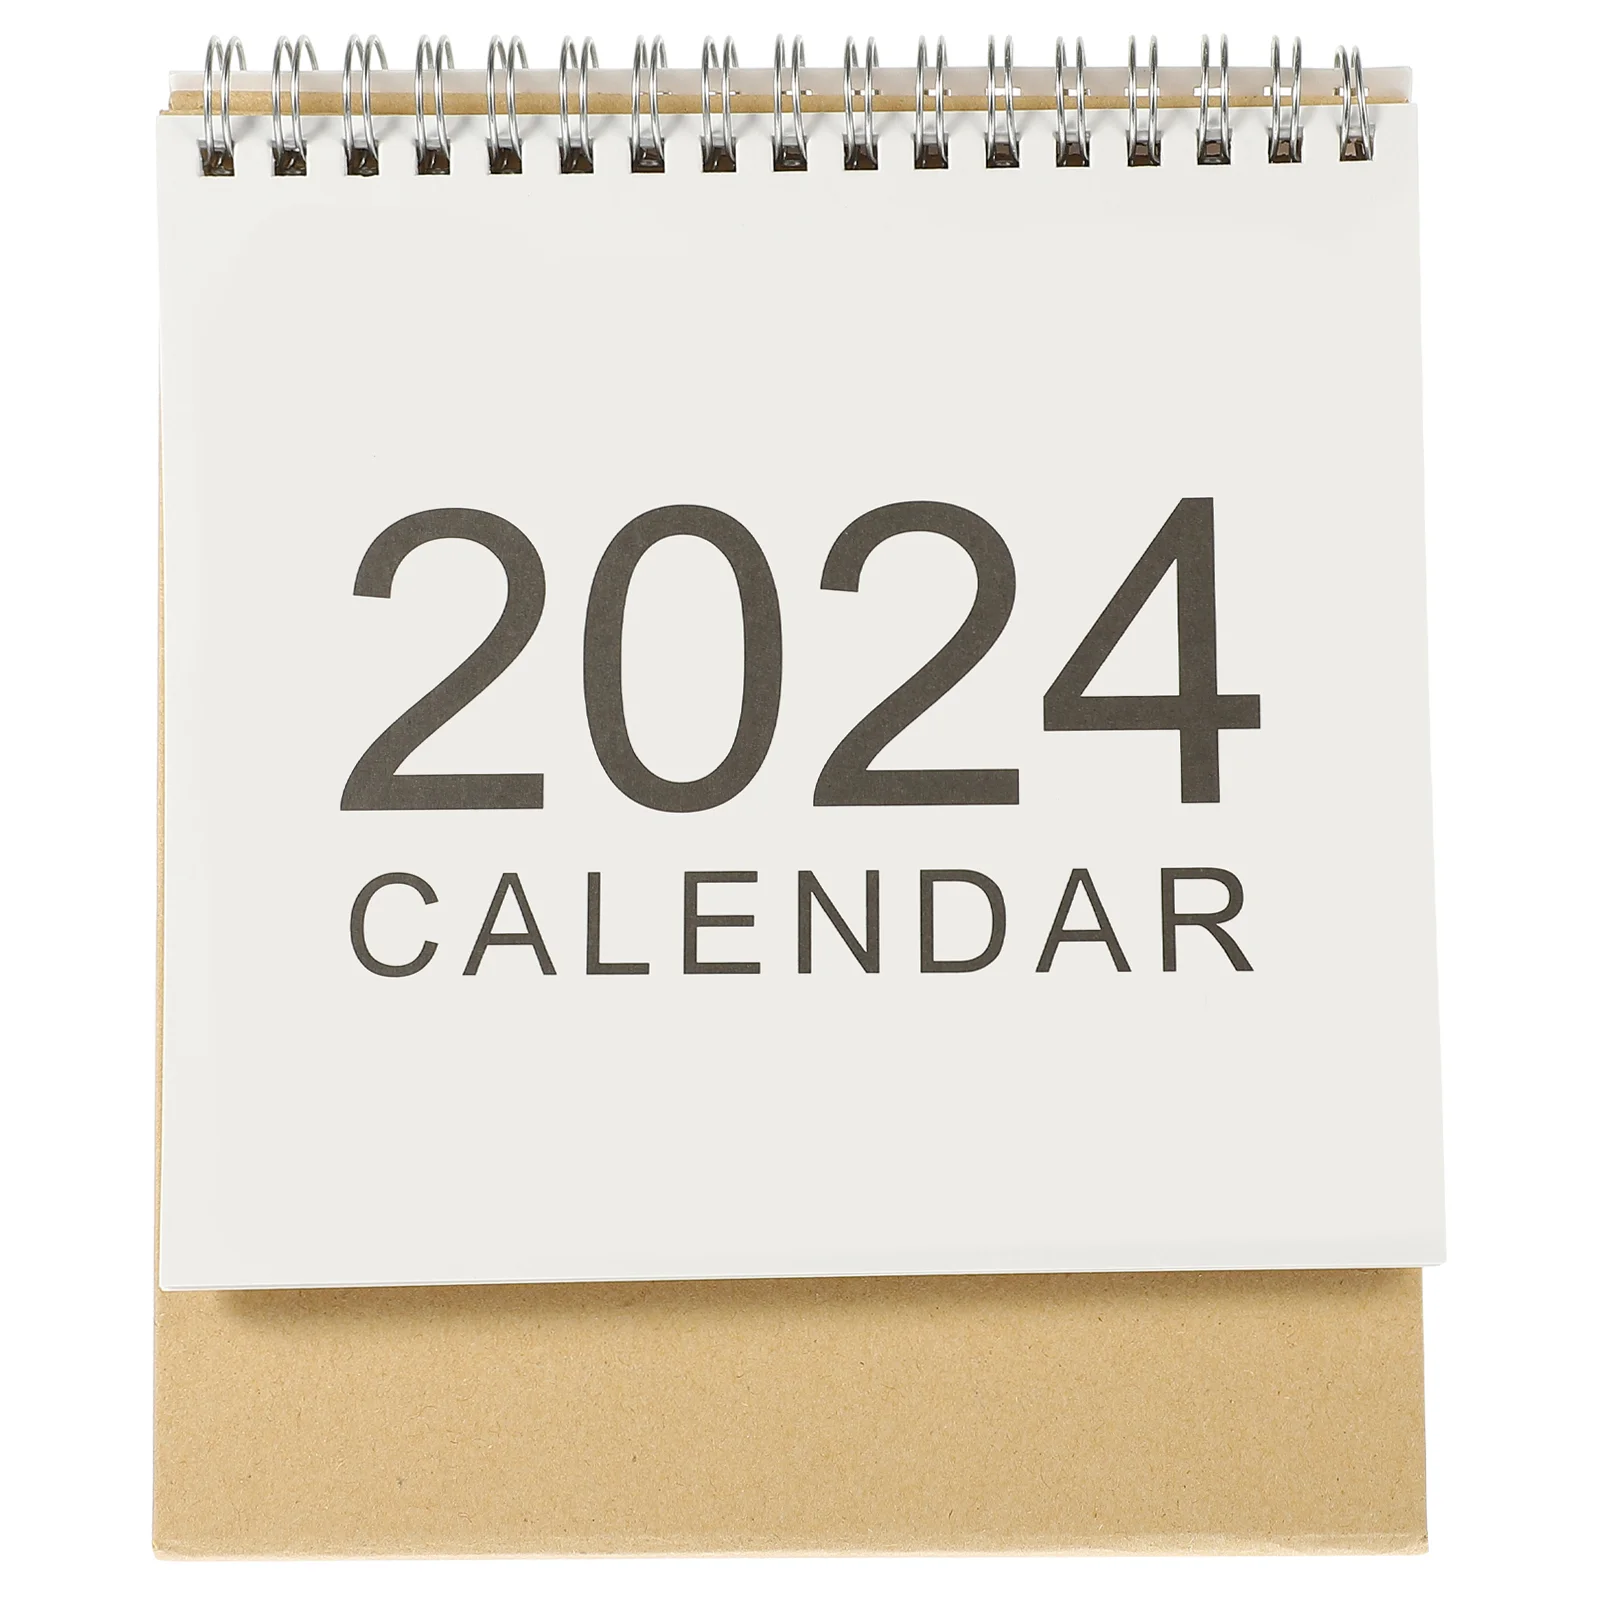 

Decorative Mini Calendar 2023 2024 Desk Creative Office Gift Novelty Ornament Home Tabletop Convenient Desktop Calendars Advent